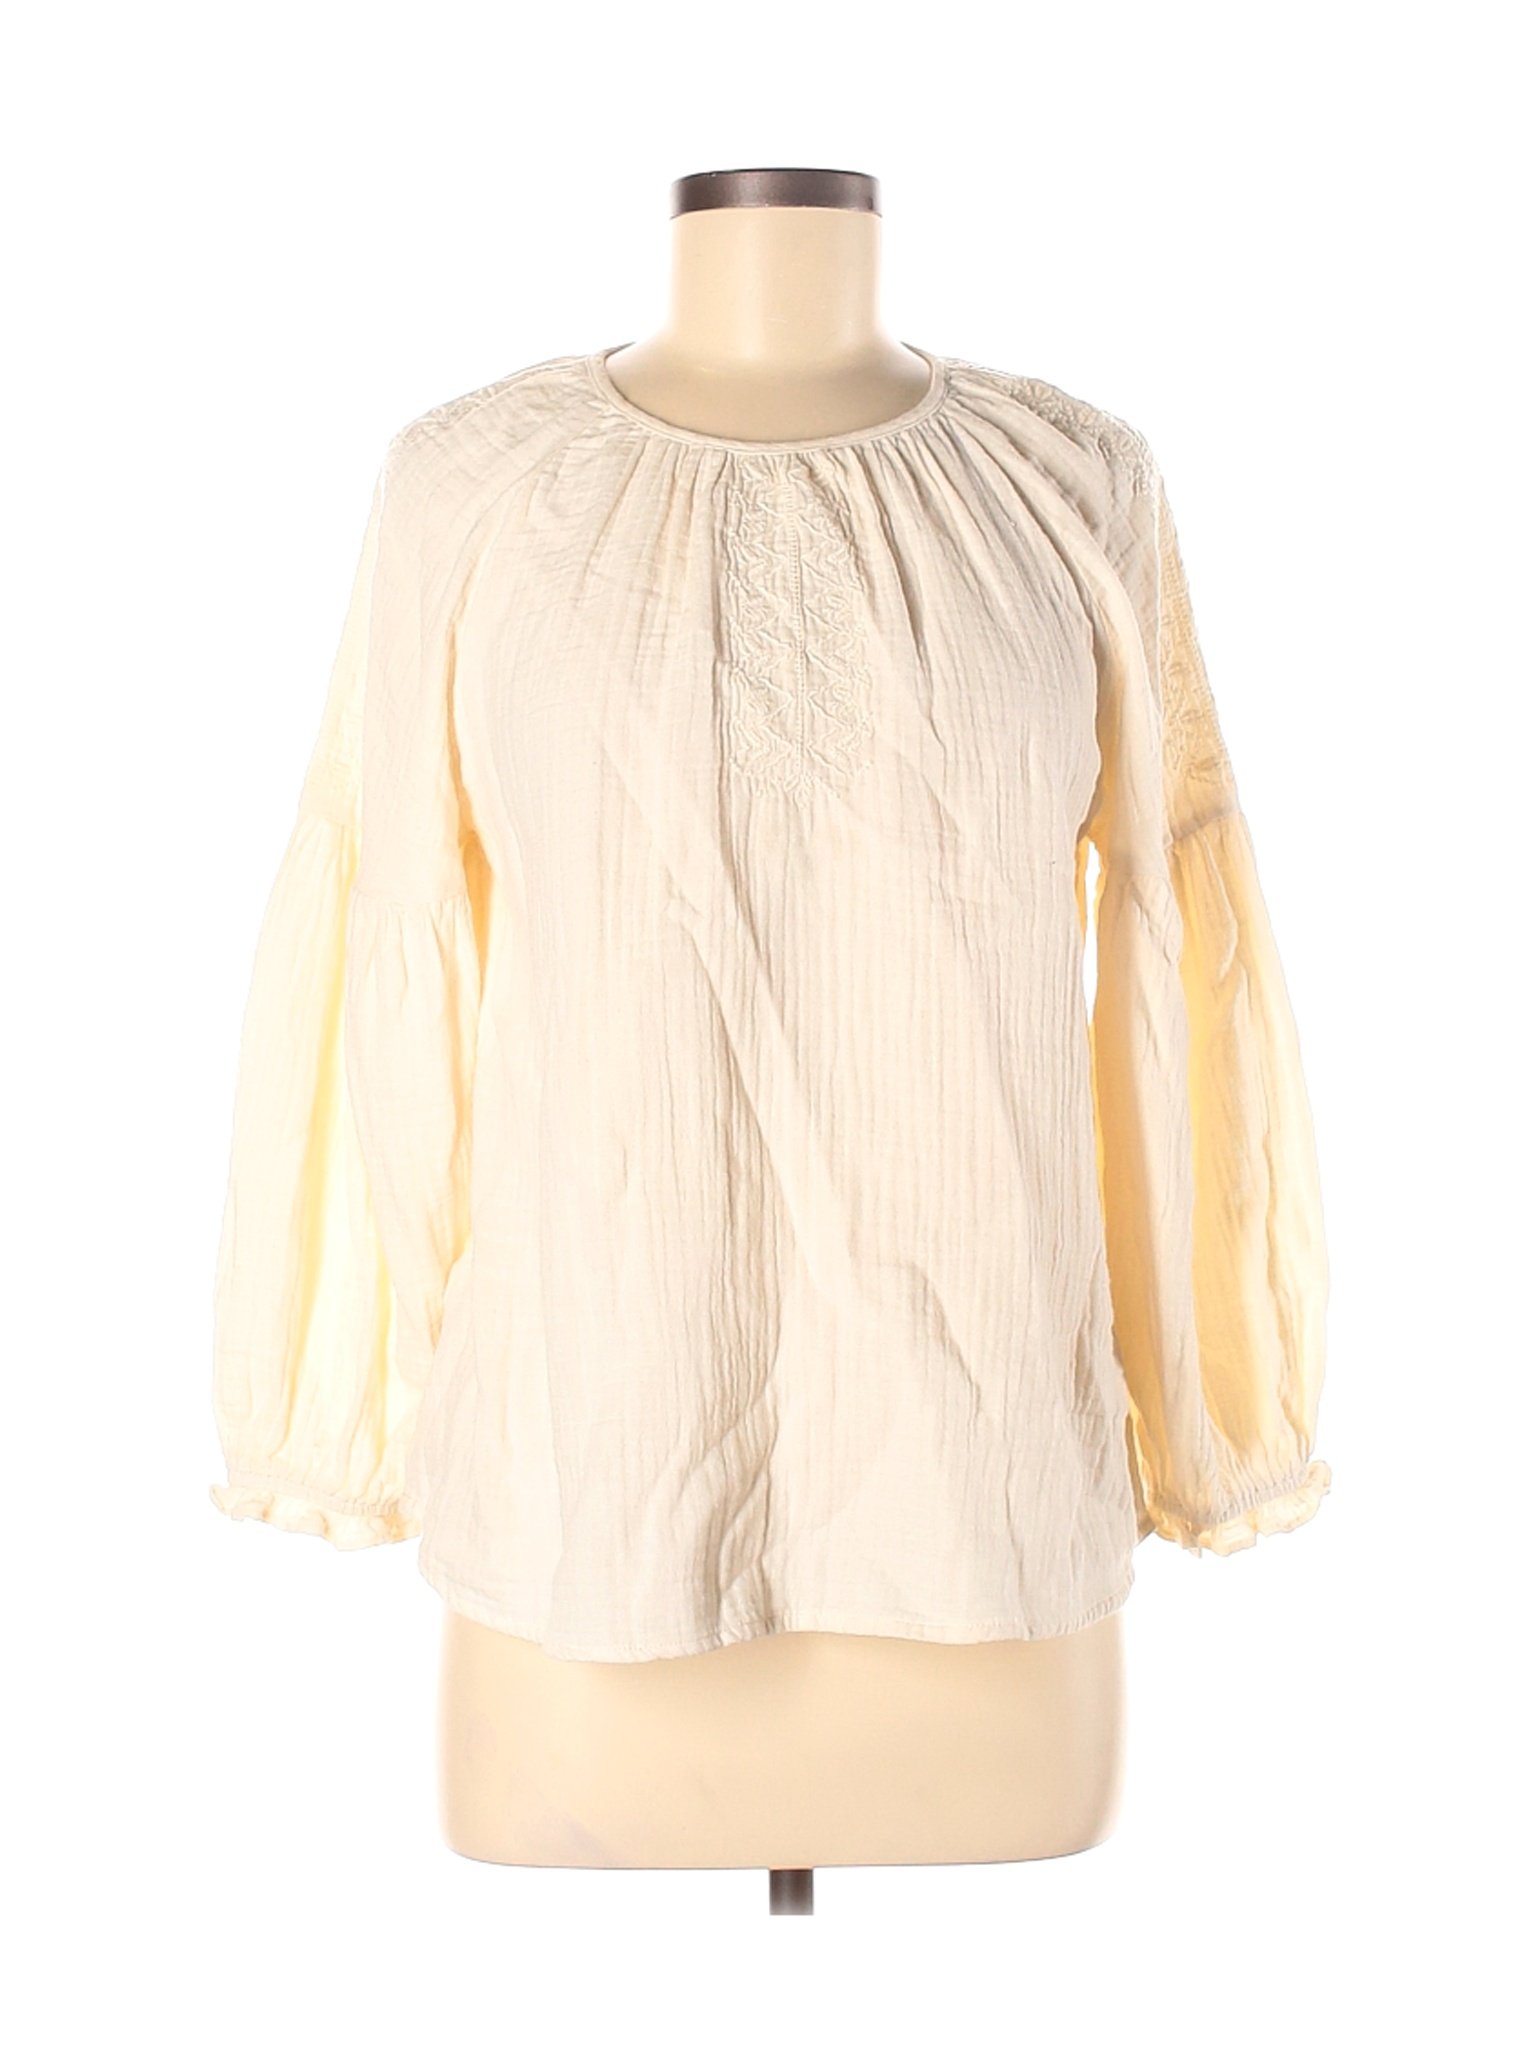 Universal Thread Women Brown Long Sleeve Blouse S | eBay